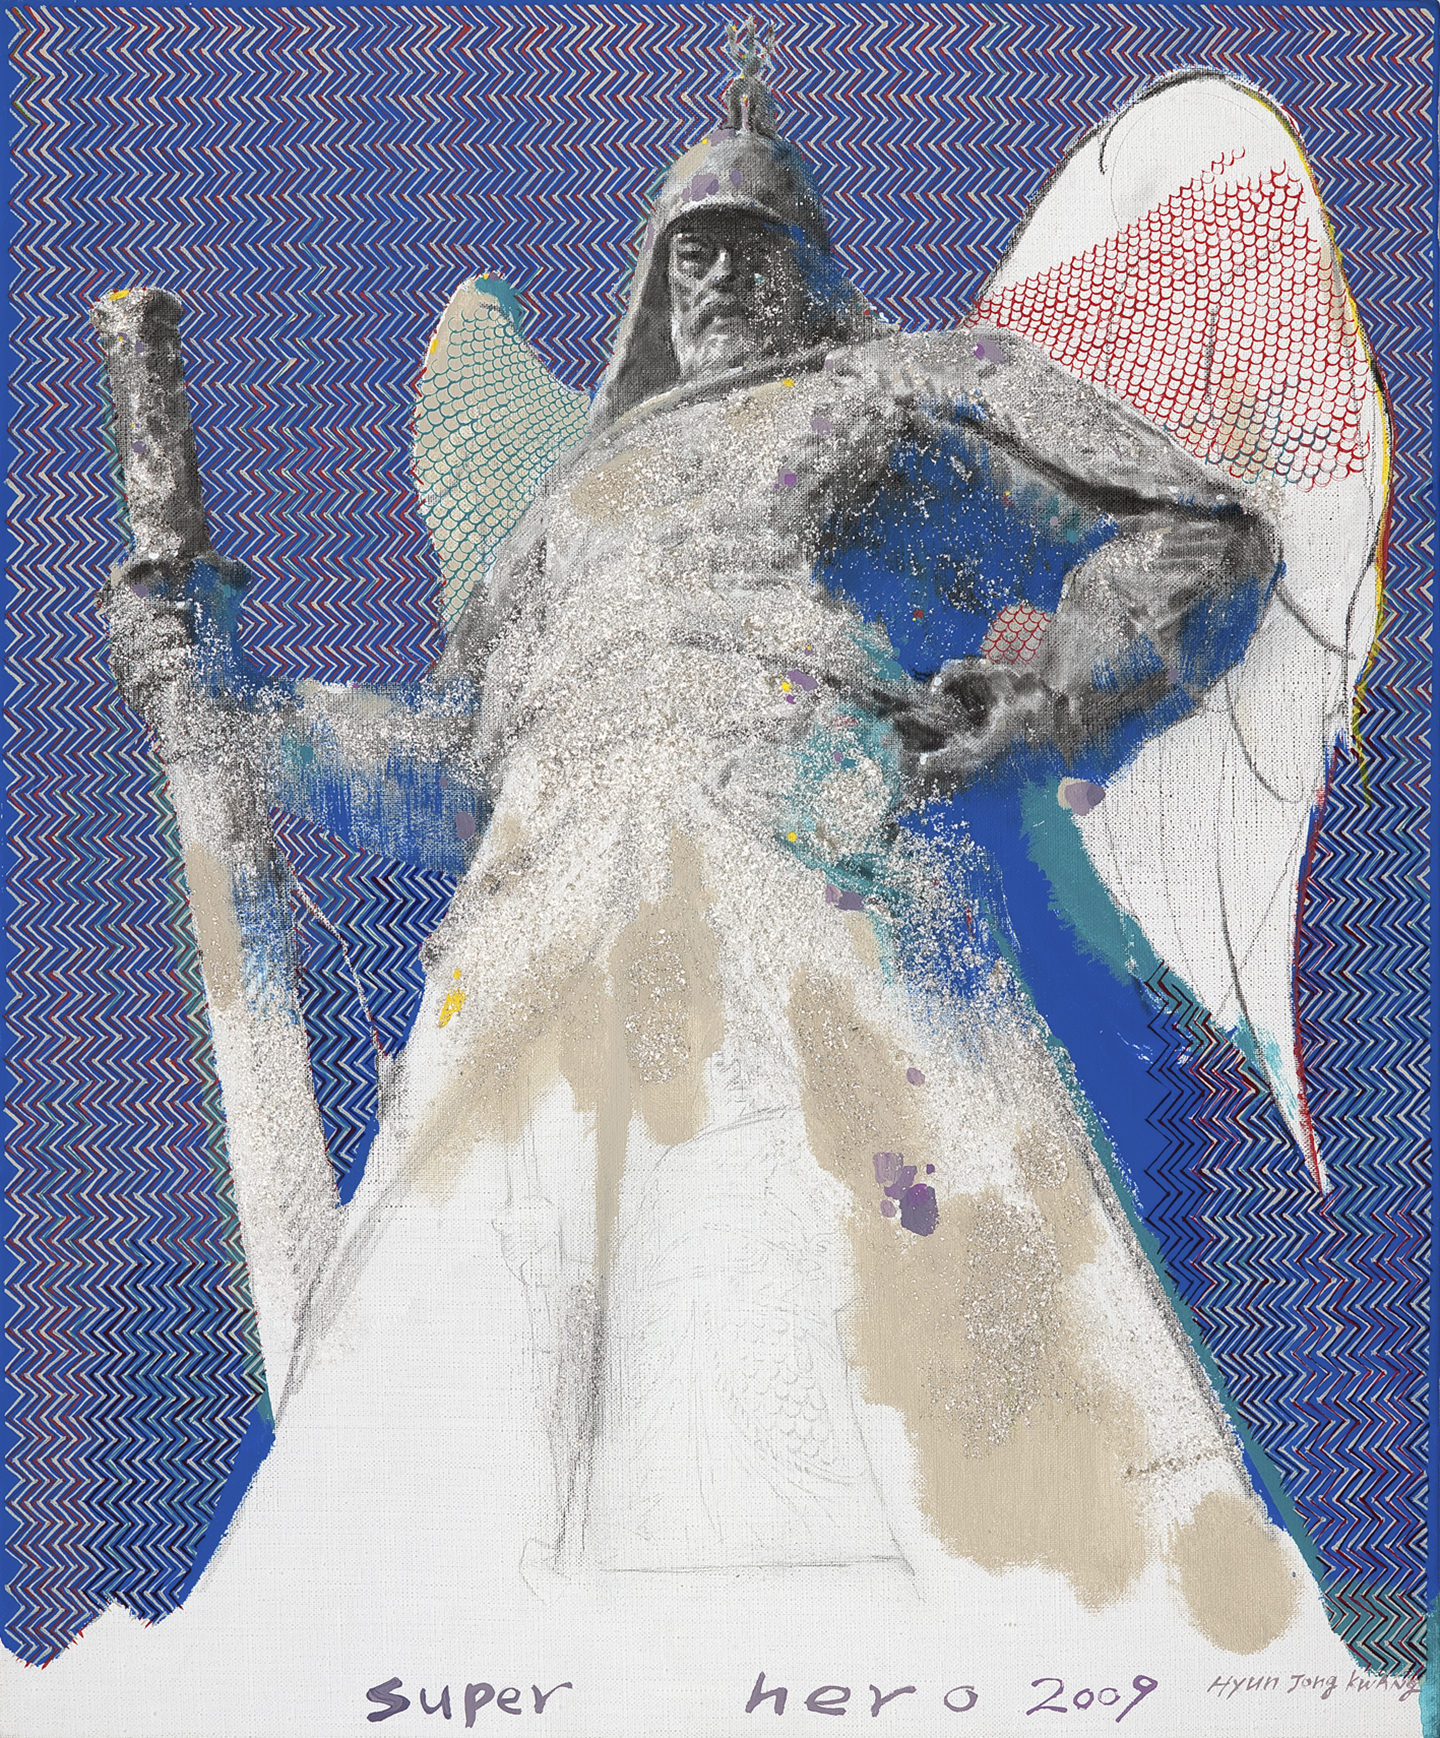 Super Hero, 2009, Acrylic, pencil, and conté-crayon on canvas, 63.8x51.2 inches 